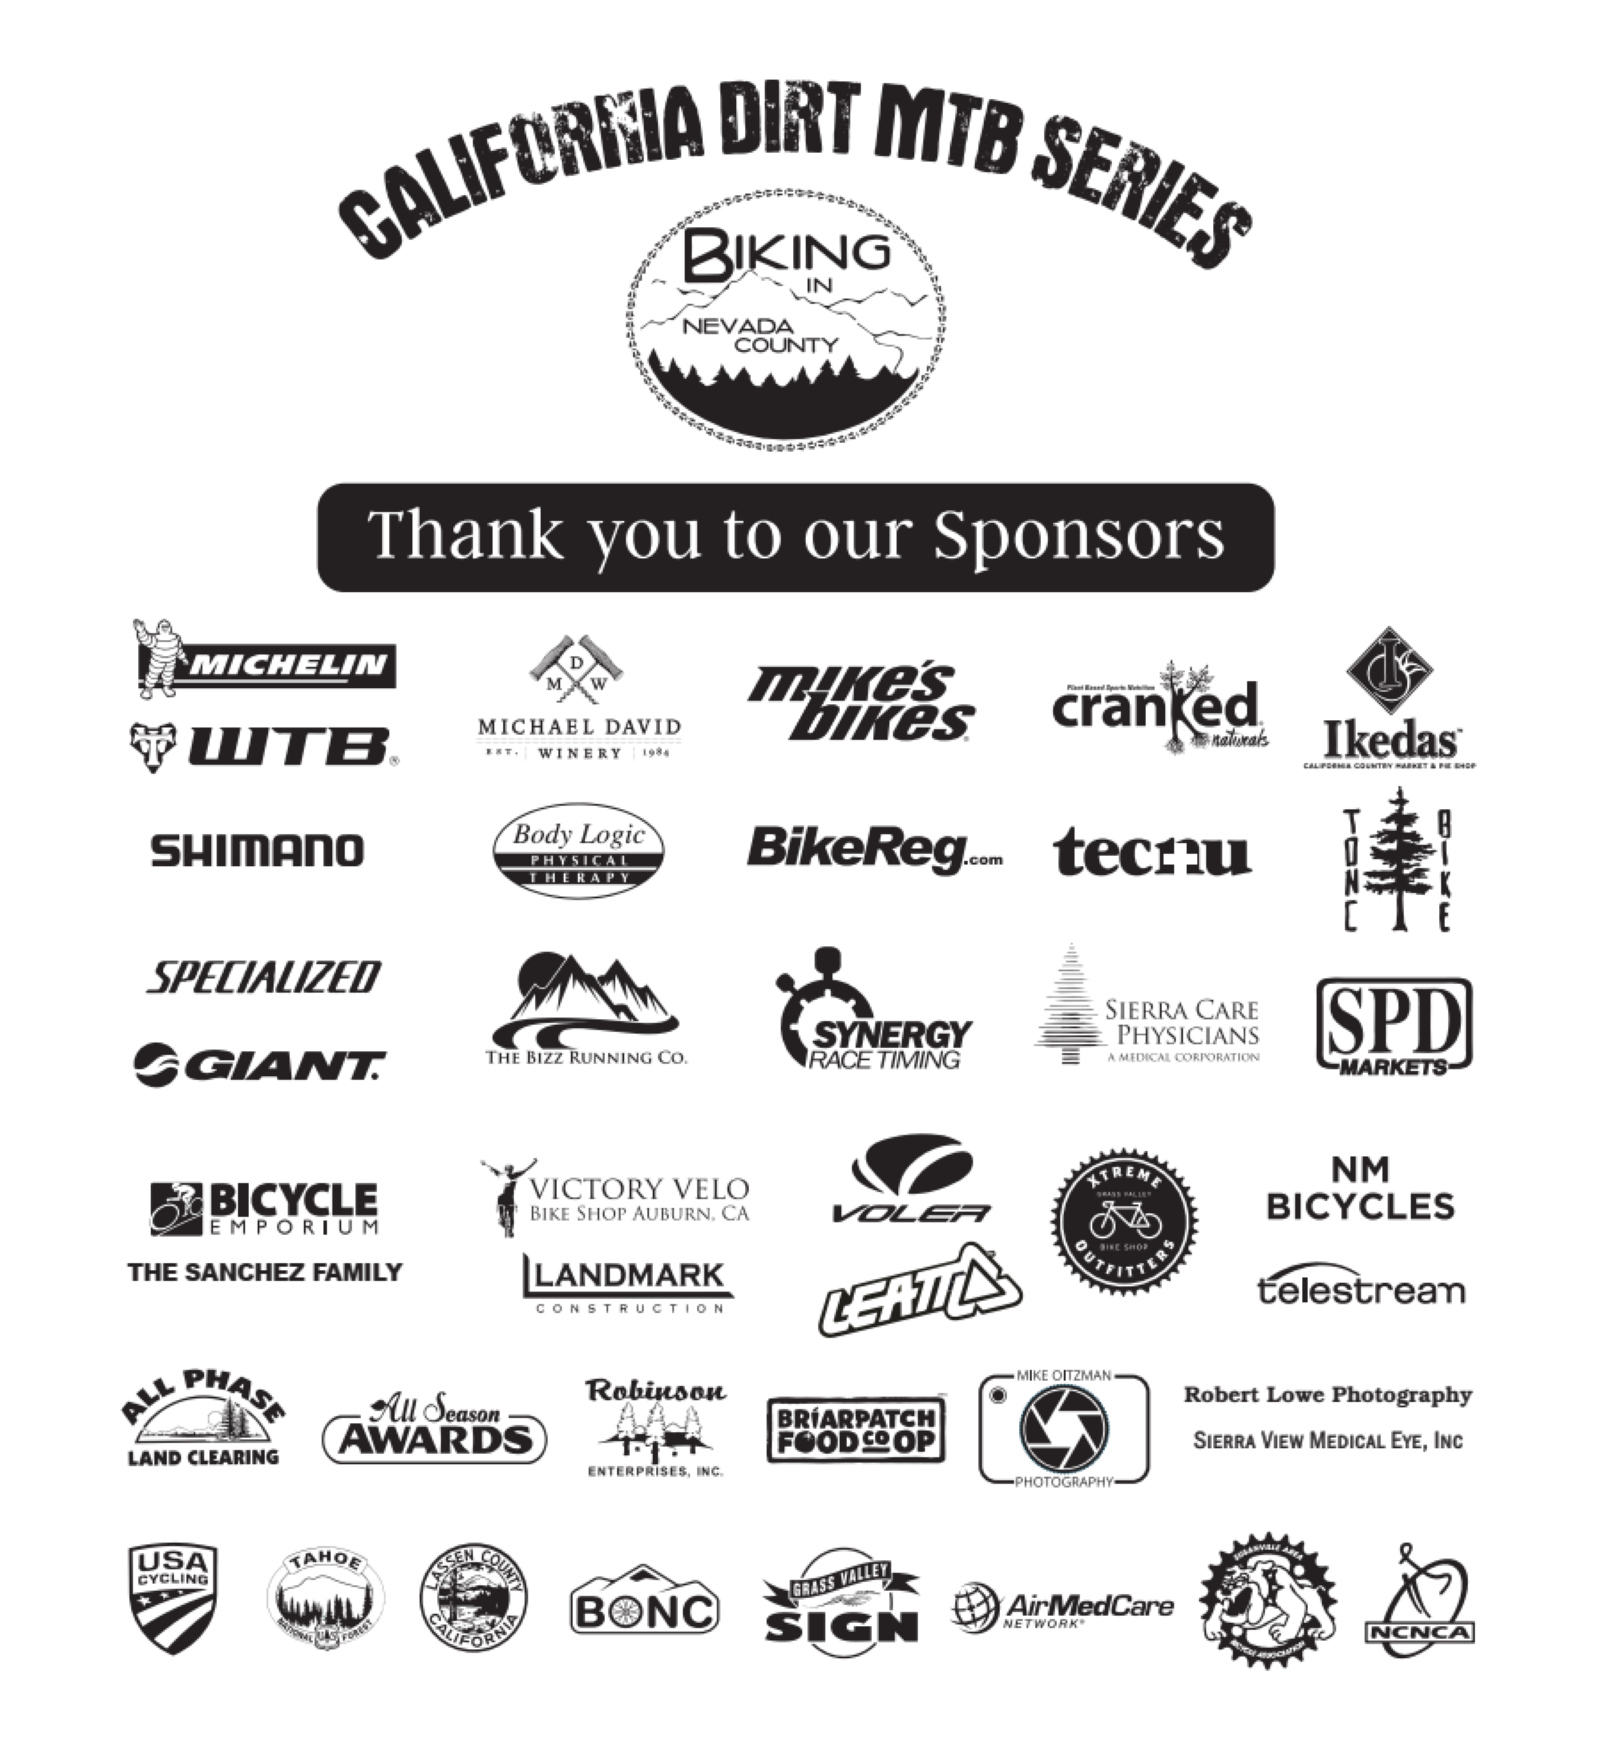 2022 CA Dirt Classic Series